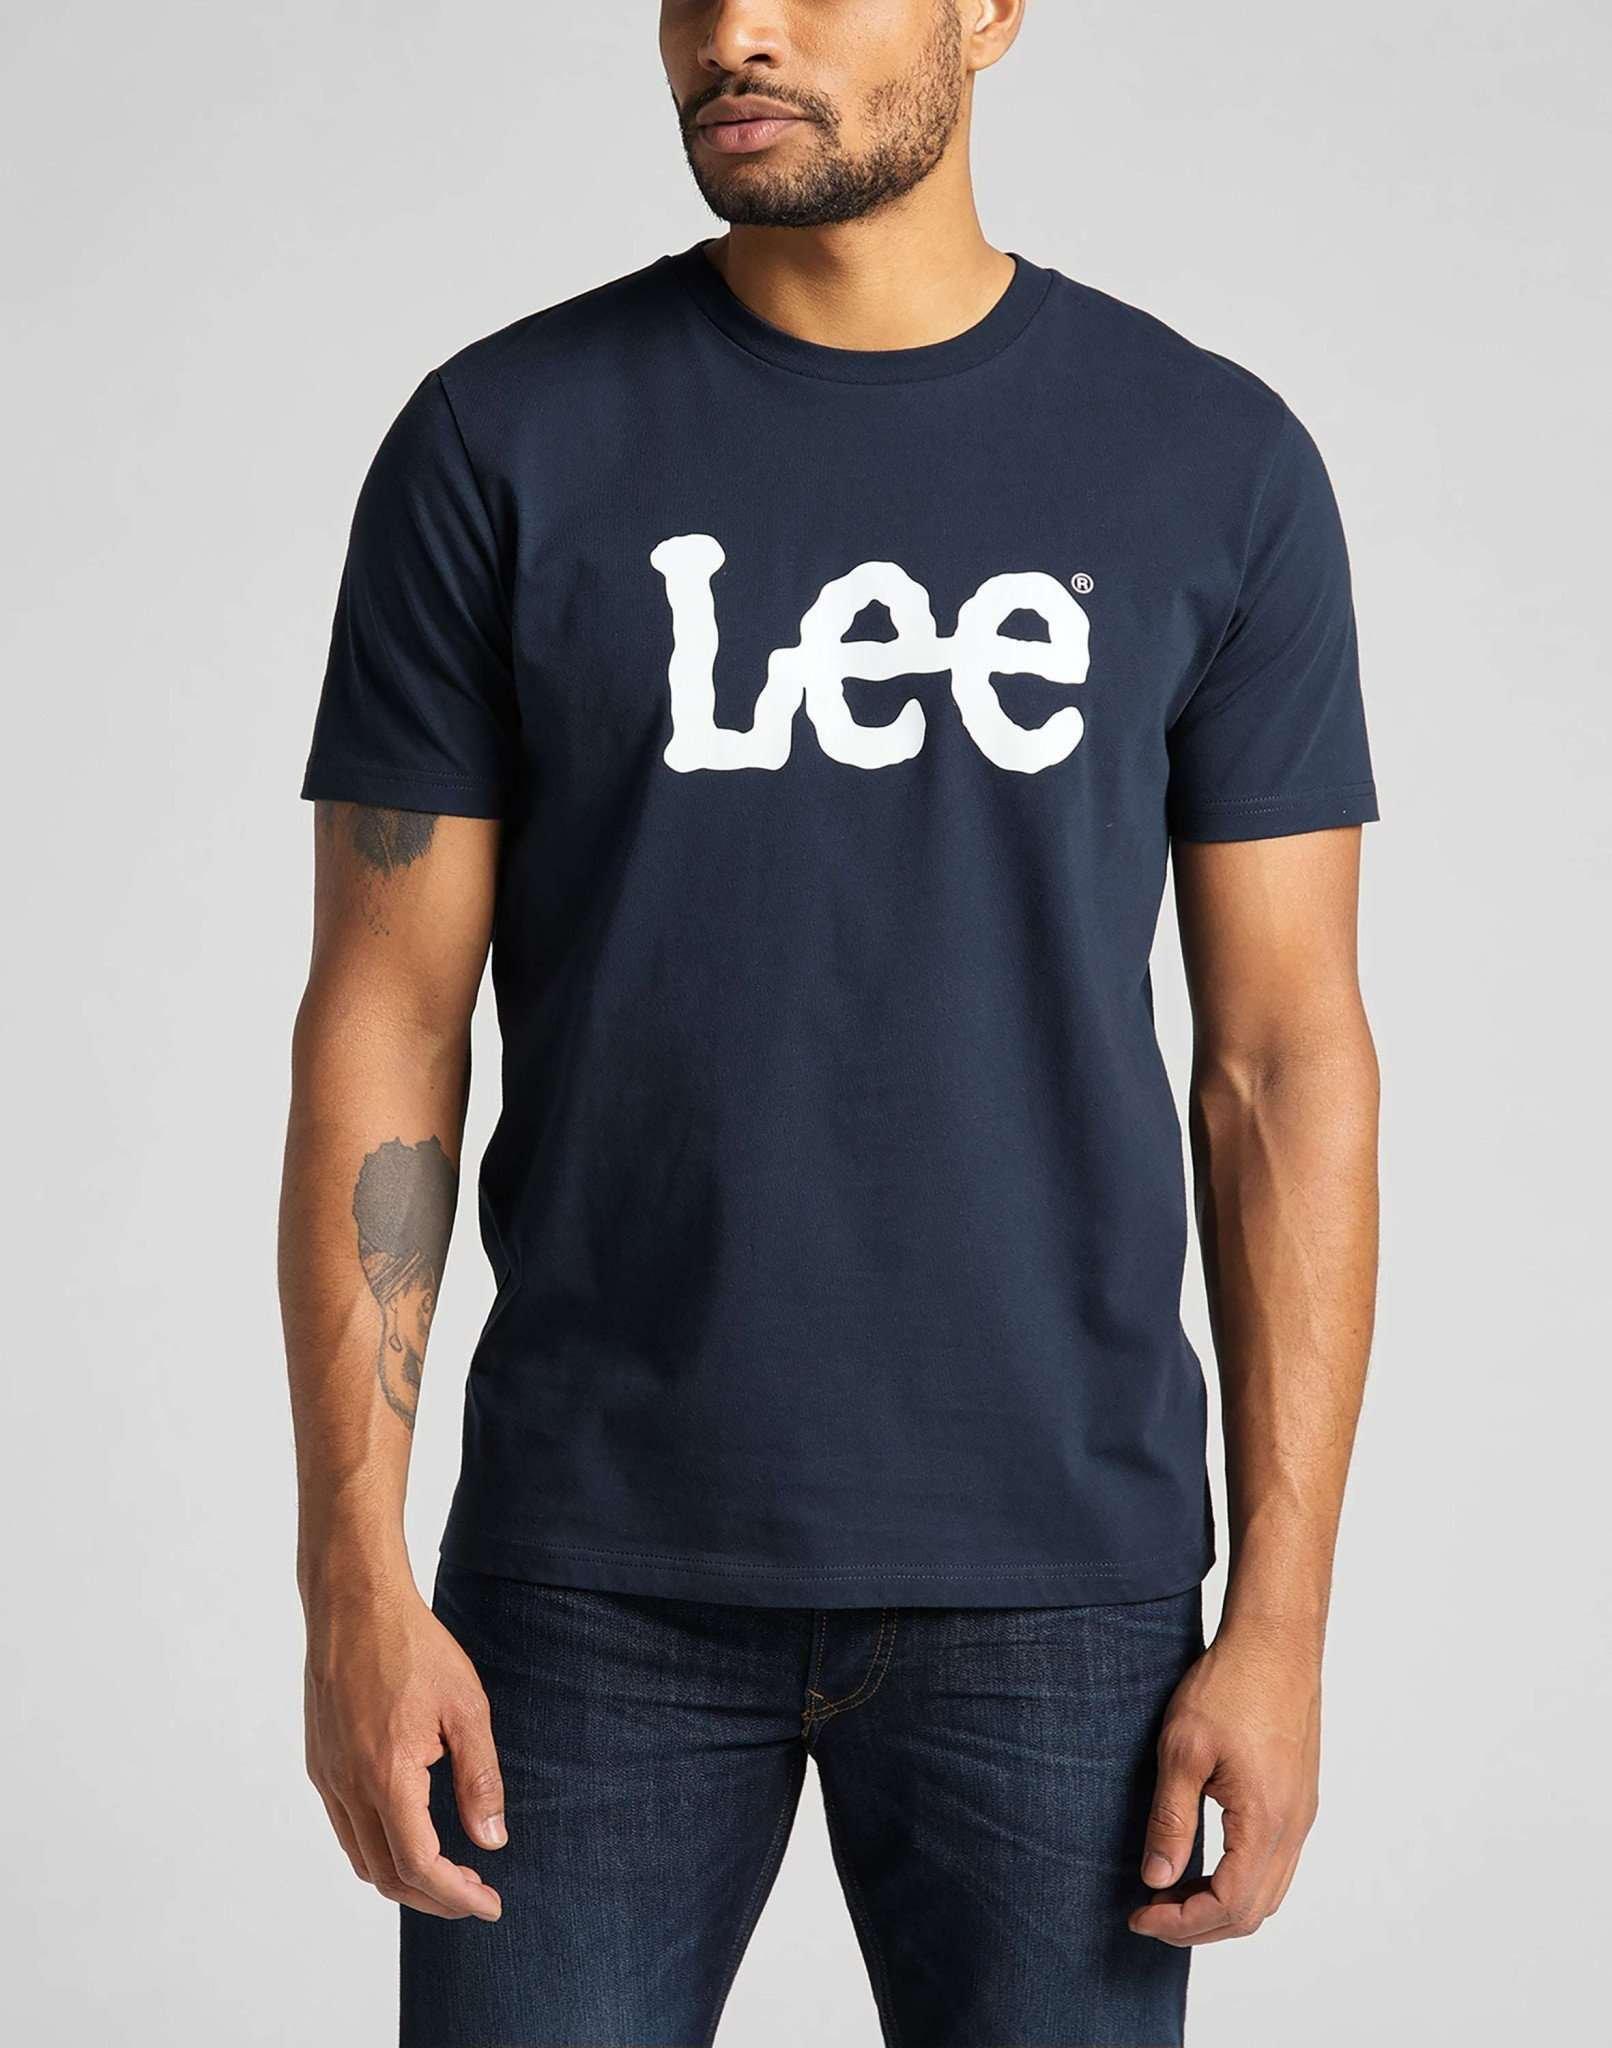 Lee  T-Shirt Wobbly Logo 